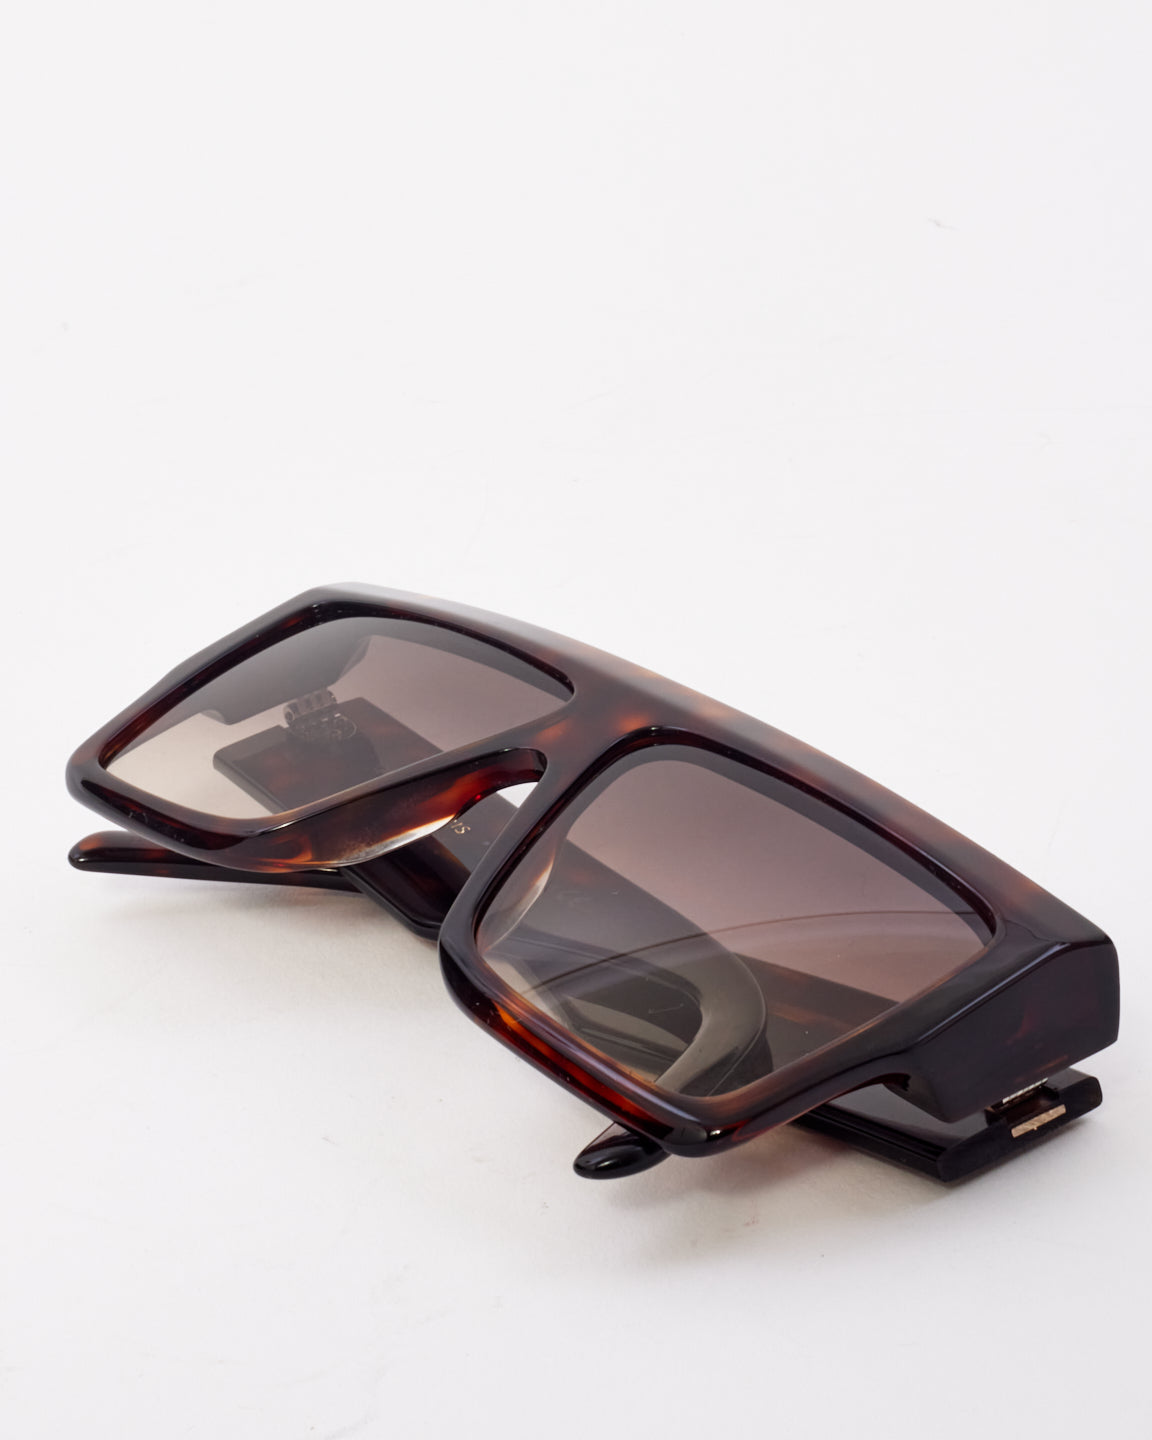 Celine Brown Tortoise Acetate Flat Top CL400921 Sunglasses